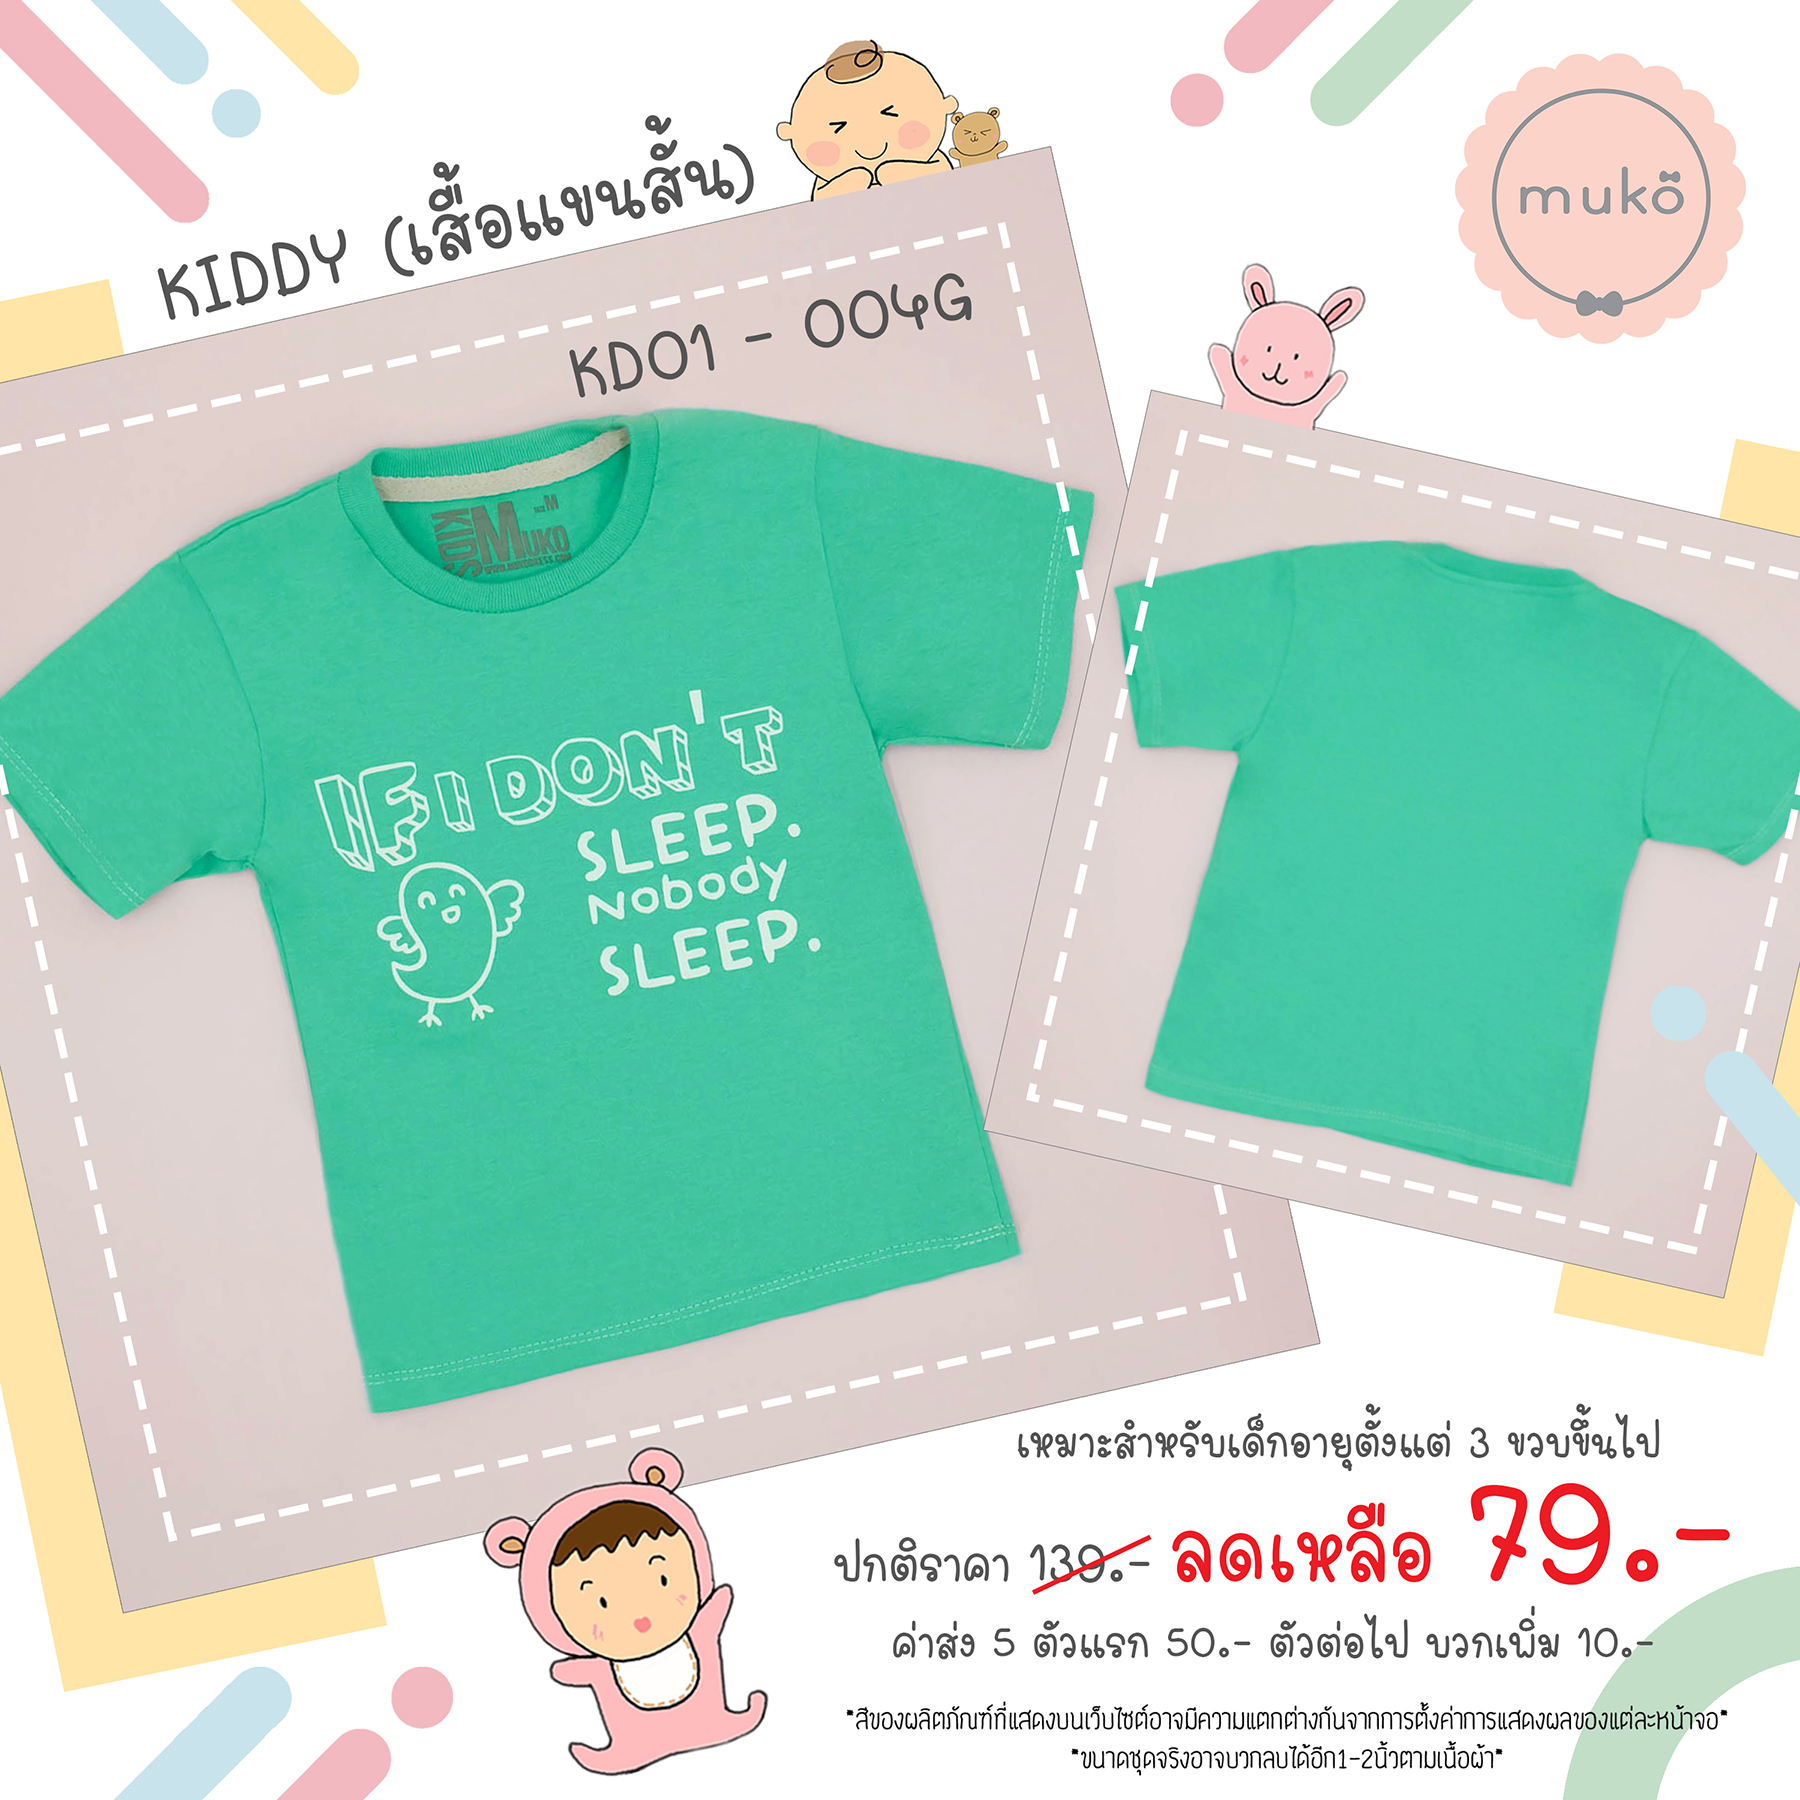 Muko Kiddy เสื้อเด็กเล็ก (แขนสั้น) Size M KD01-004G M ลาย If I don't sleep สีเขียว